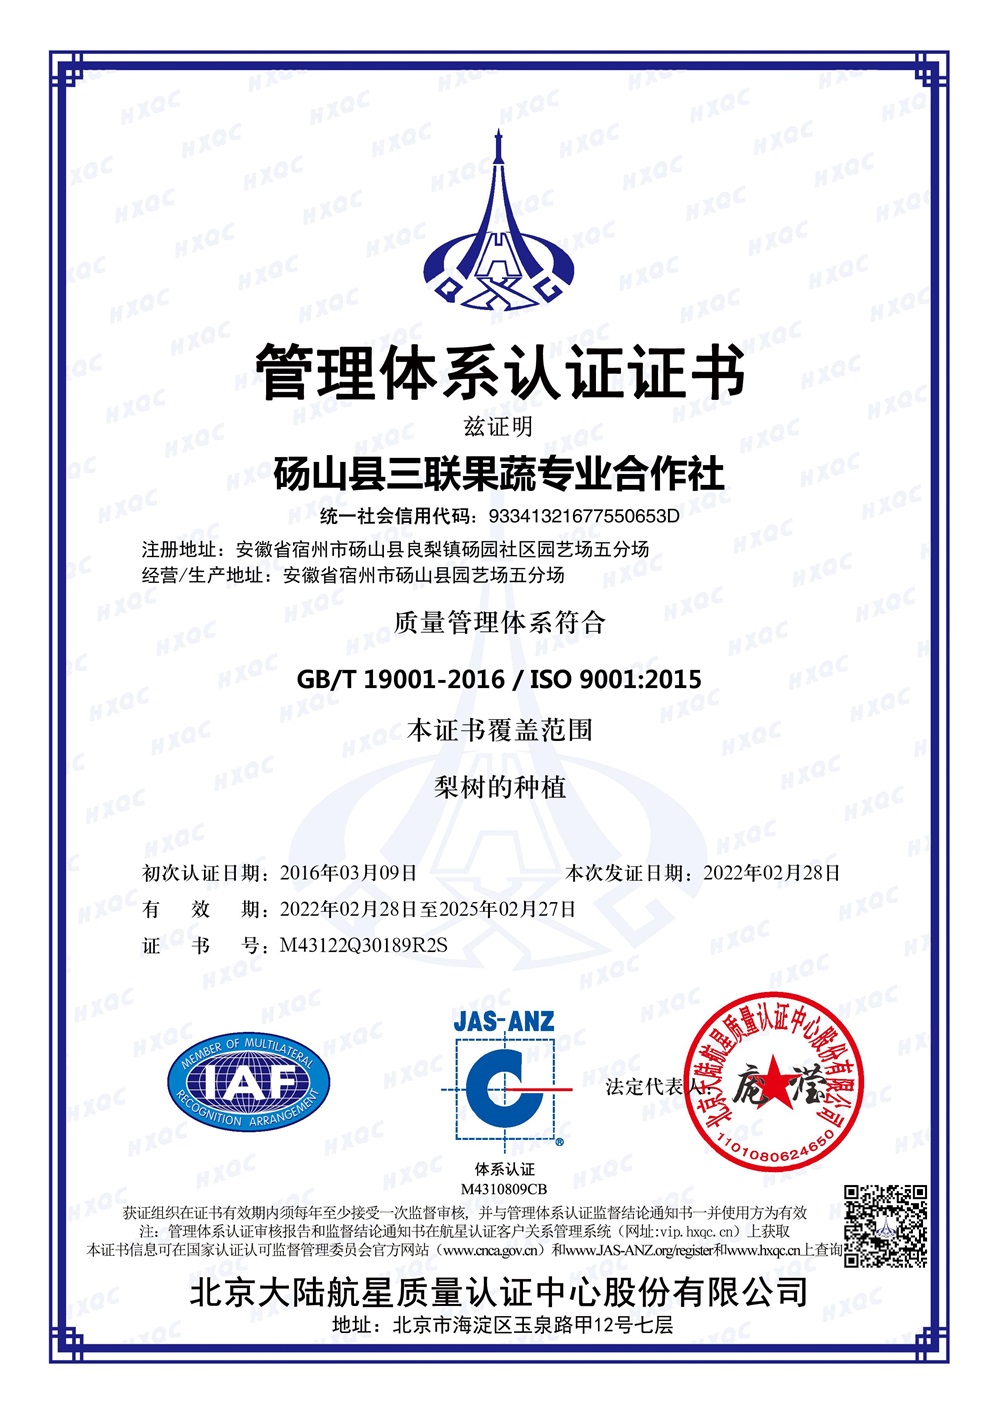 GB/T 19001-2016/ISO 9001:2015质量管理体系认证证书